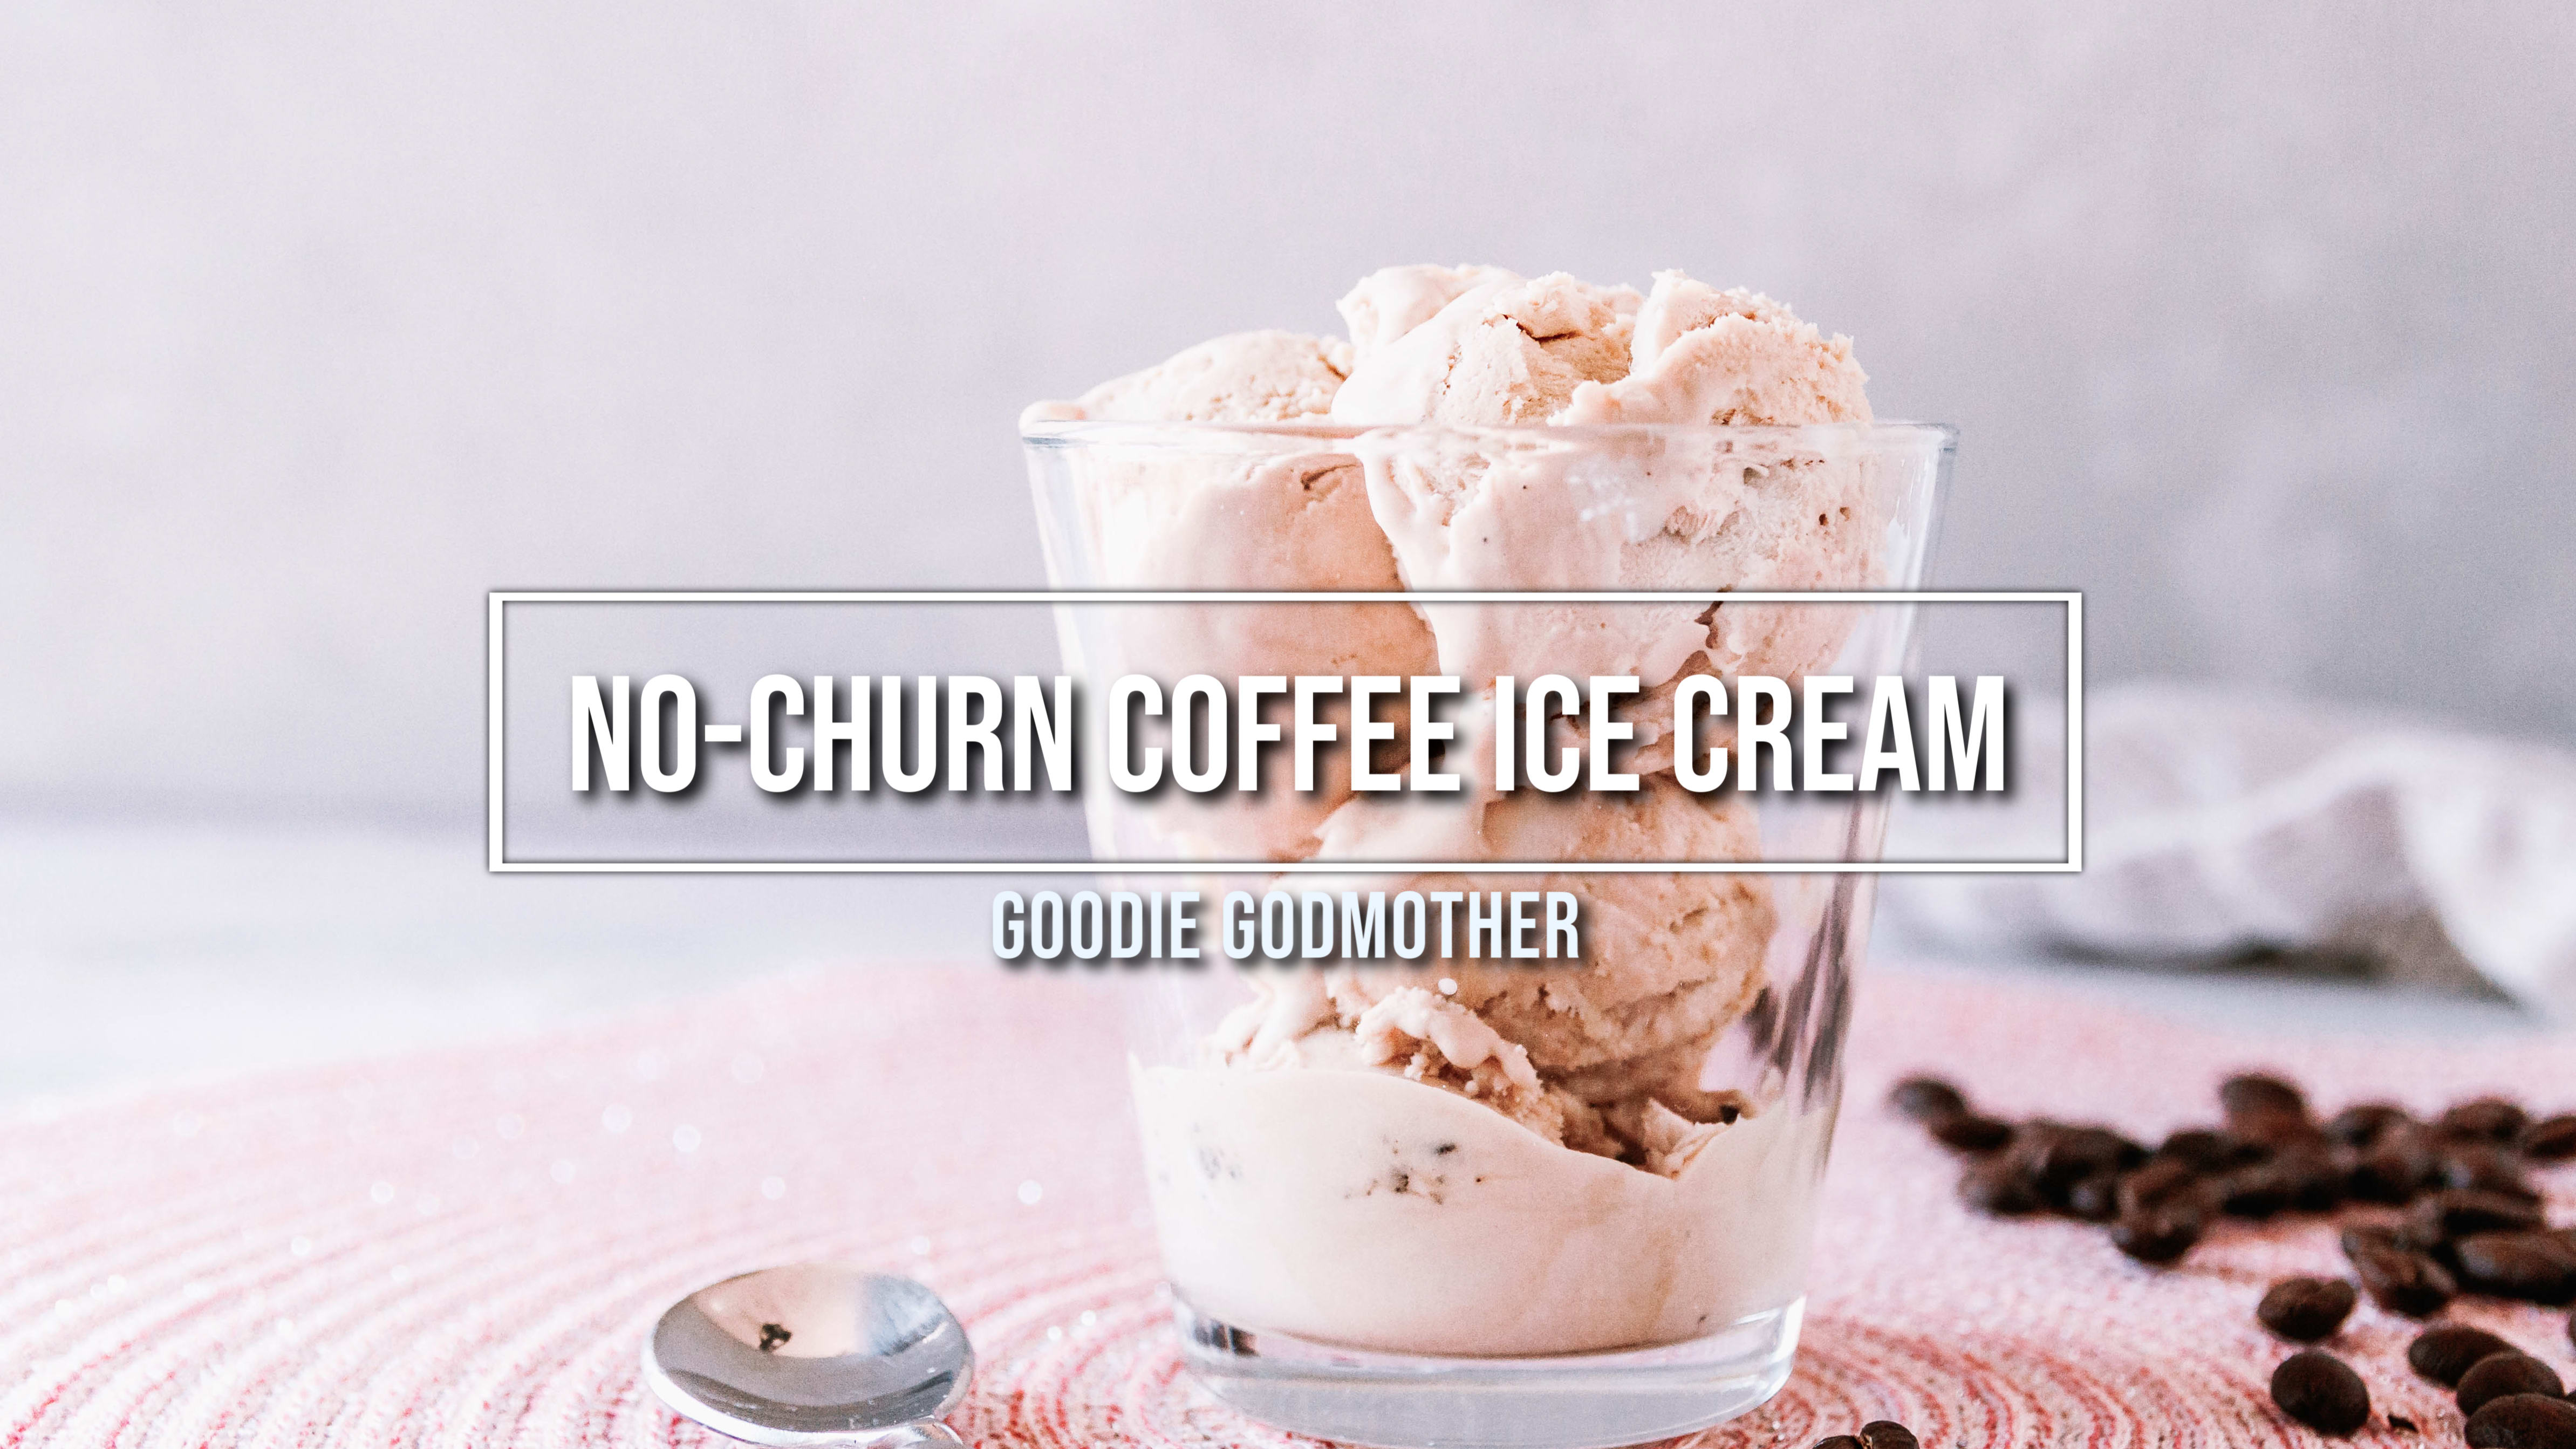 No-Churn Coffee Ice Cream - Goodie Godmother